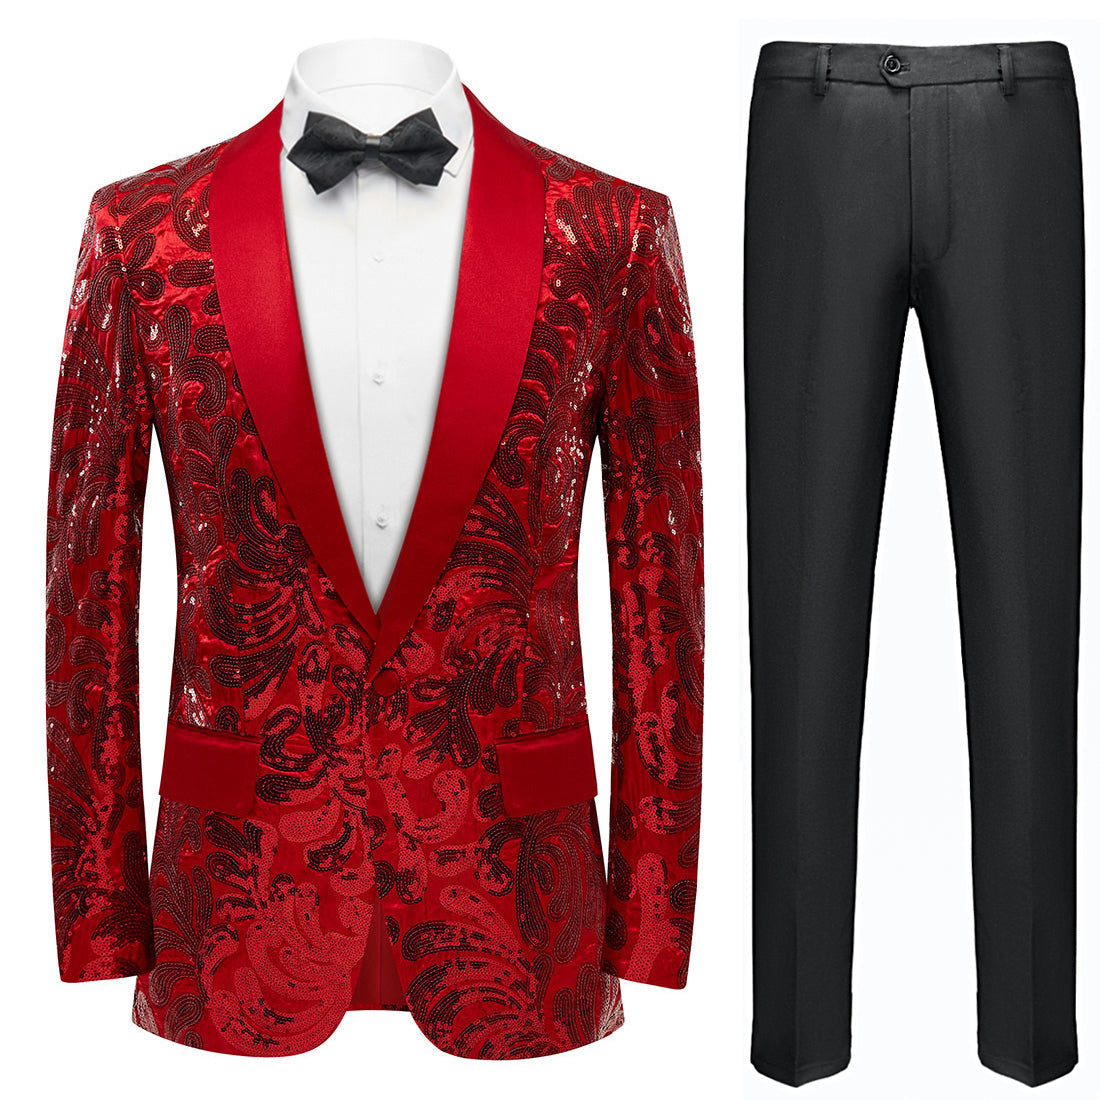 Men's Exquisite Shawl Lapel Floral Sequin Red Tuxedo Jacket